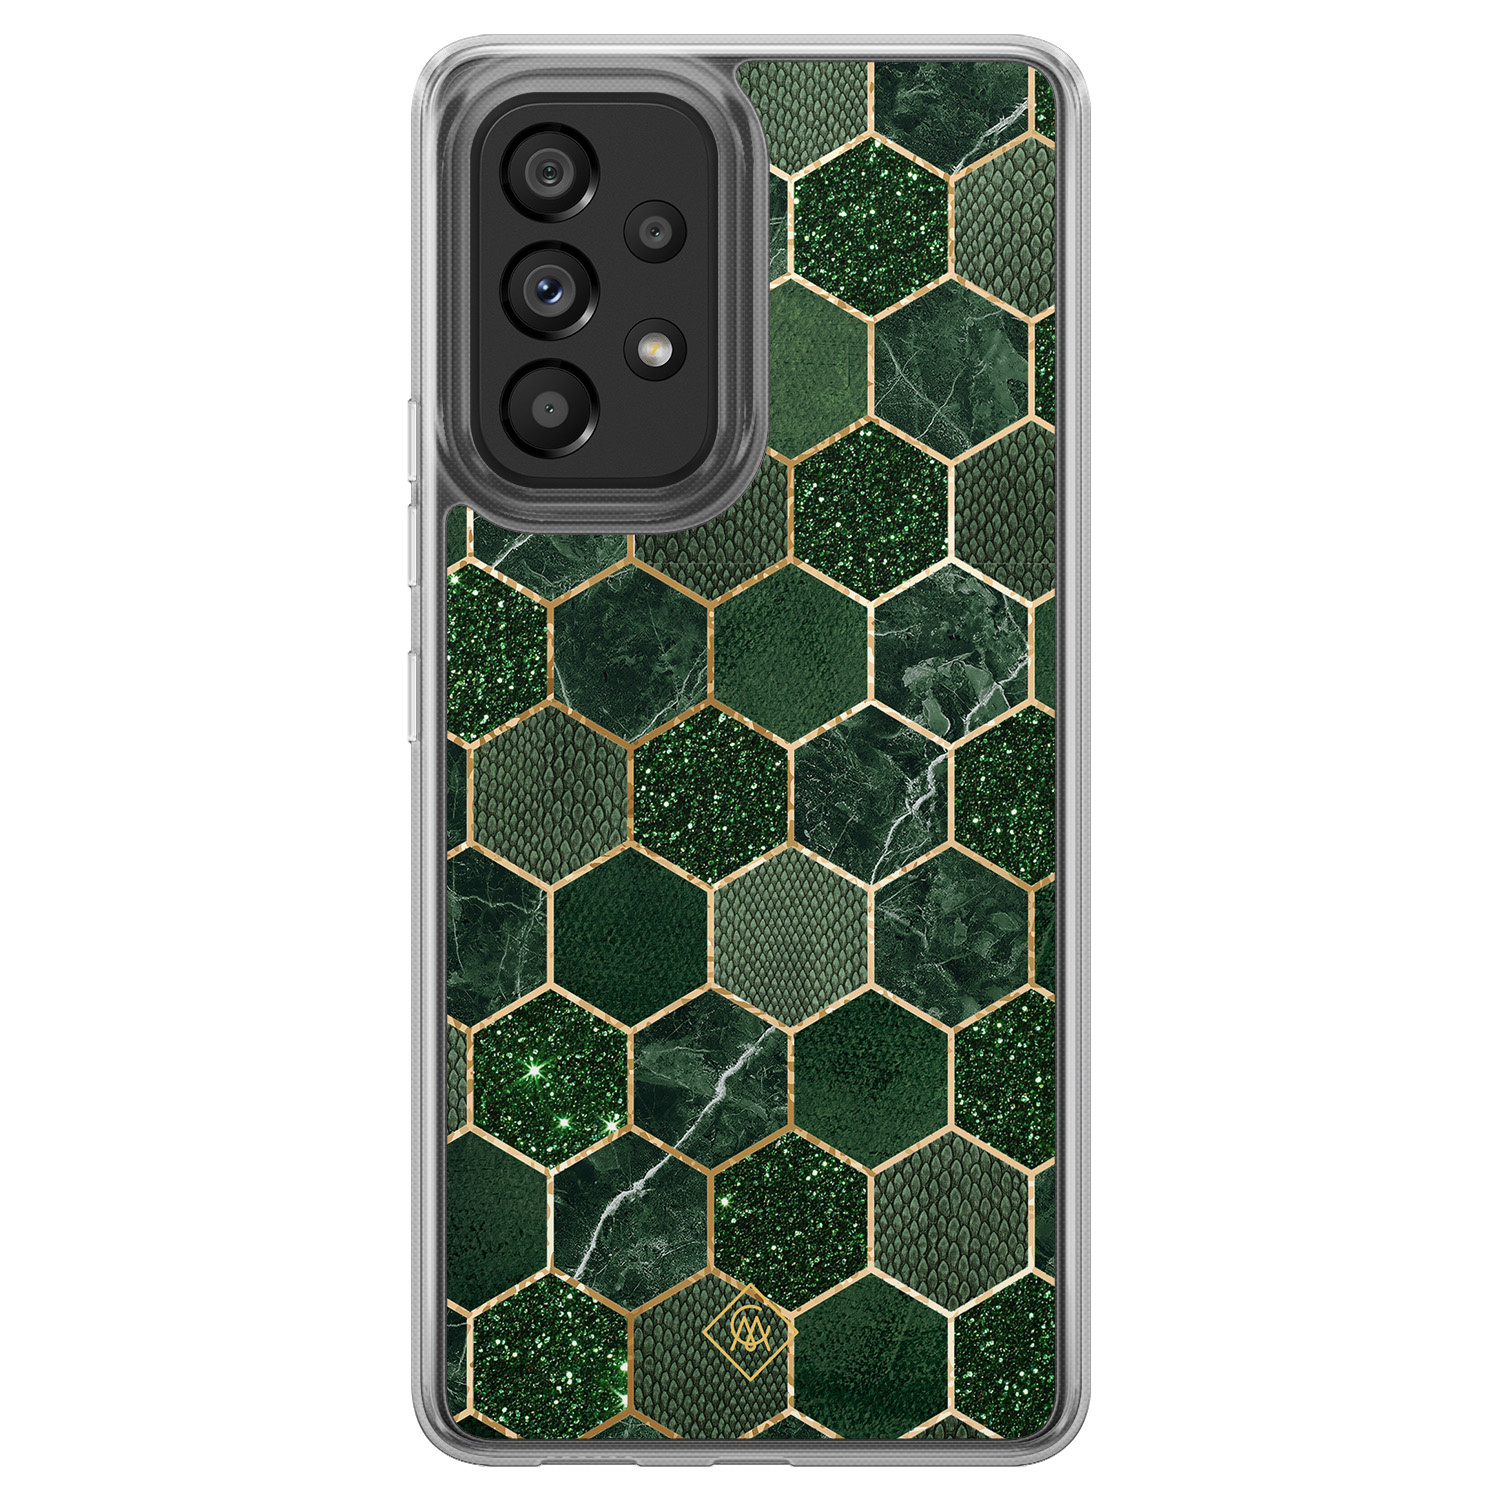 Samsung Galaxy A52 5G hoesje siliconen - Kubus groen - Casimoda® 2-in-1 case hybride - Schokbestendig - Geometrisch patroon - Verhoogde randen - Groen, Transparant